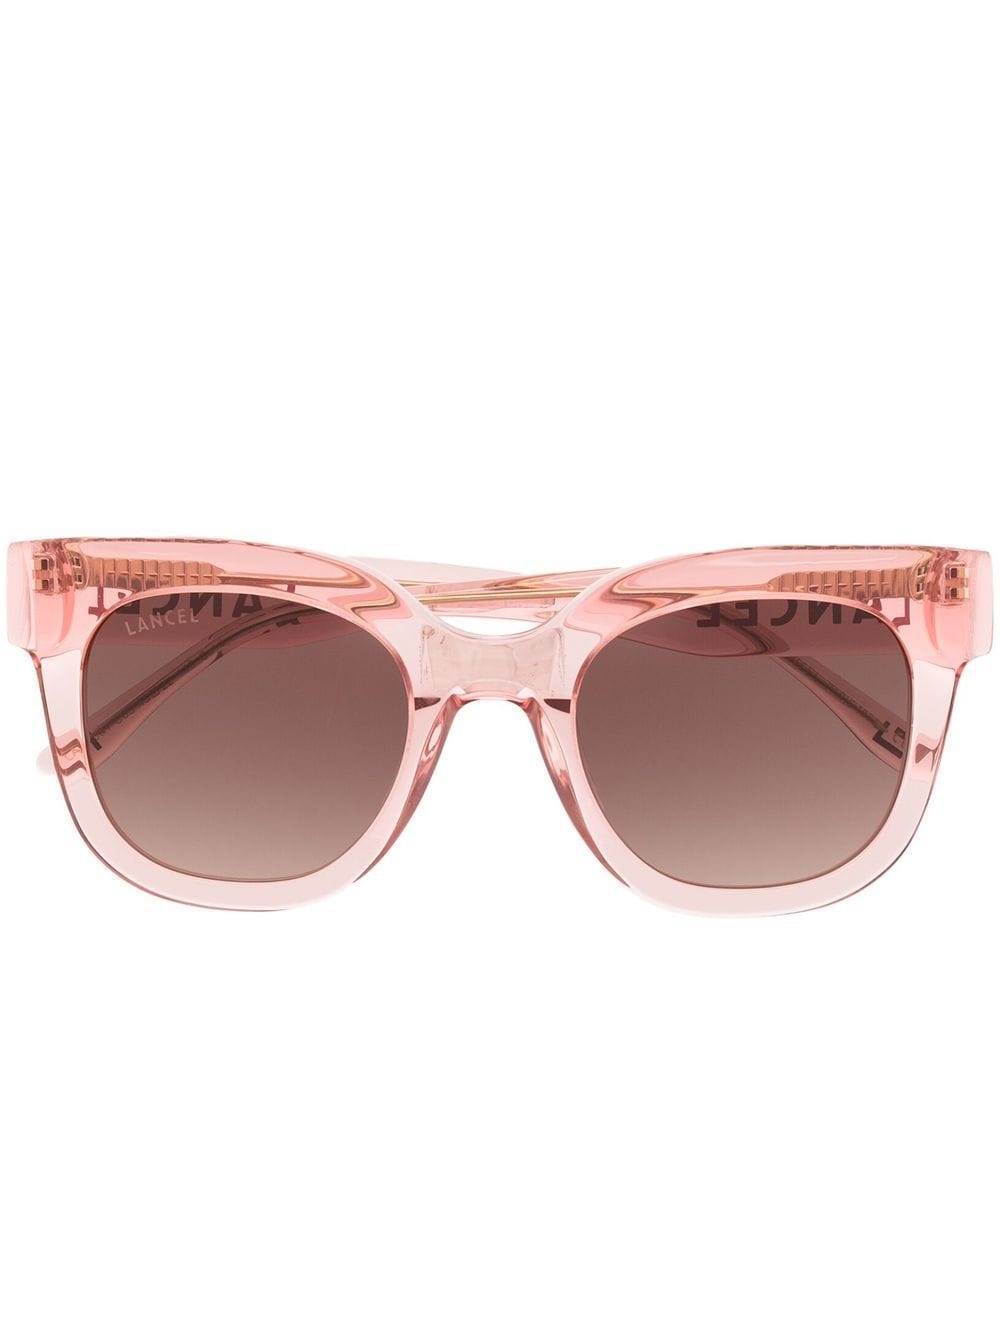 Lancel logo-print tinted sunglasses - Pink